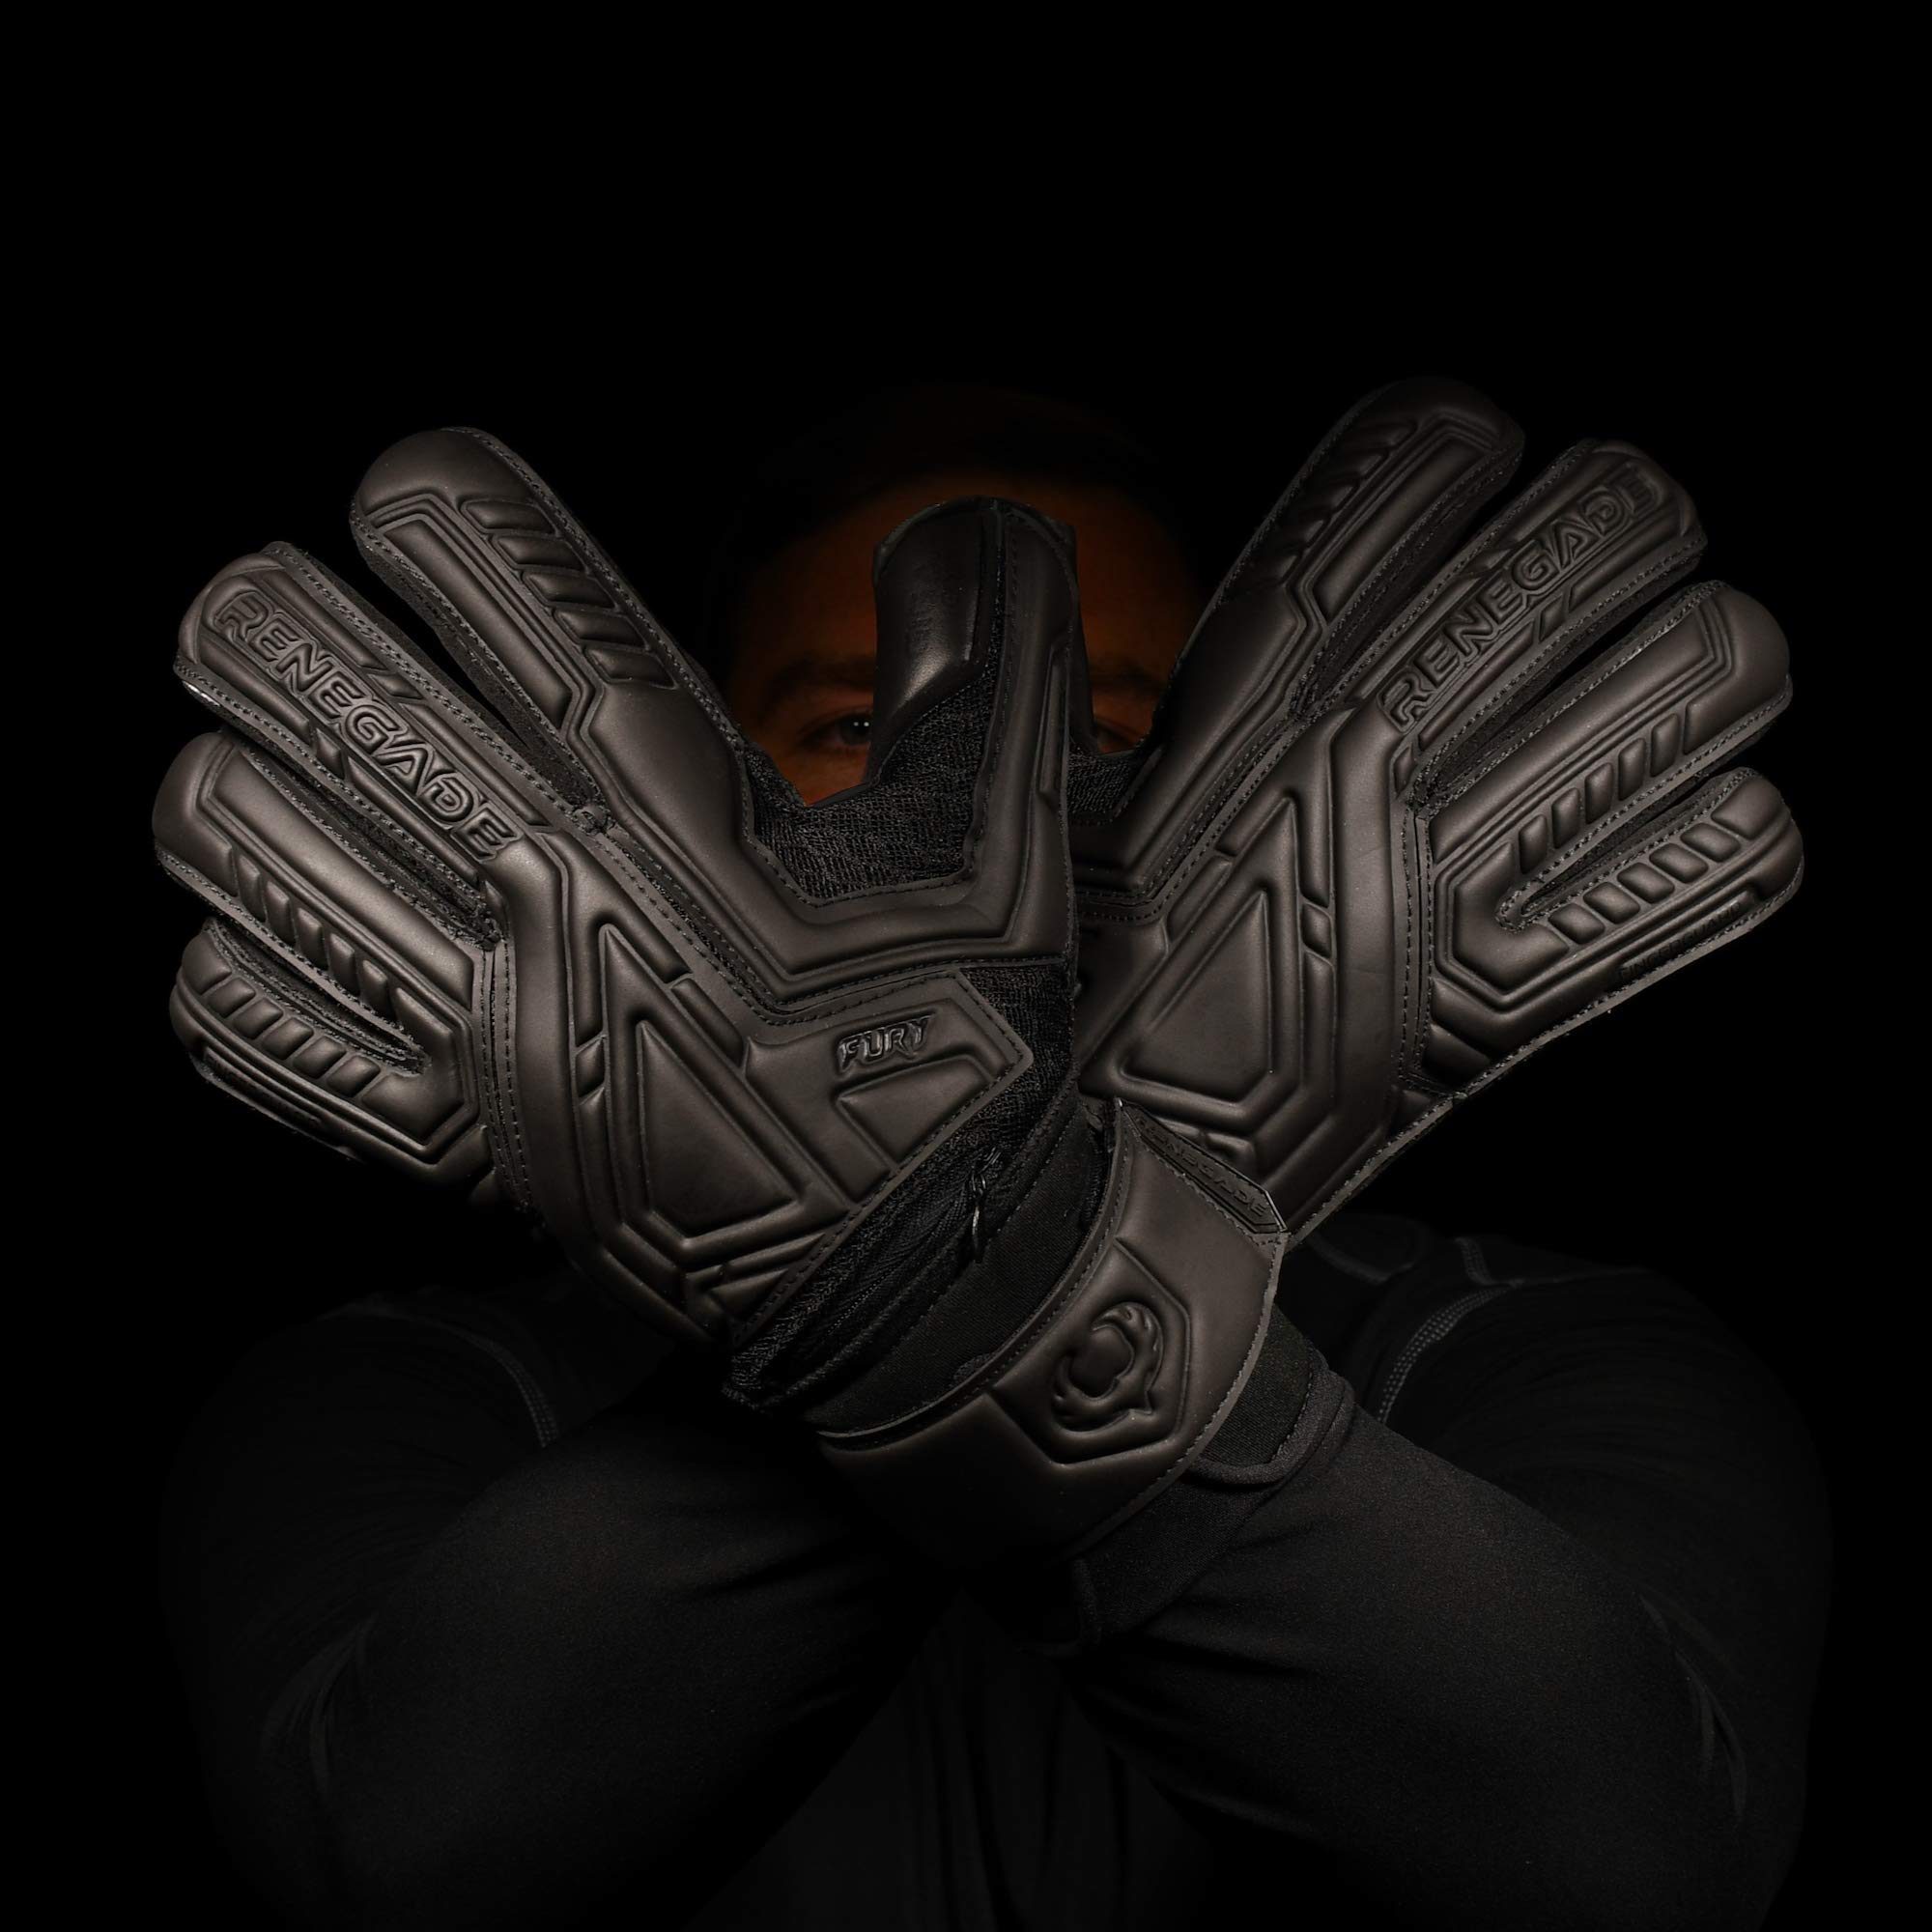 Renegade GK Fury Nightfall Goalie Gloves with Pro-Tek Fingersaves | 4mm Giga Grip & 4mm Duratek | Black Goalkeeping Gloves (Size 9, Youth-Adult, Roll Cut, Level 4)